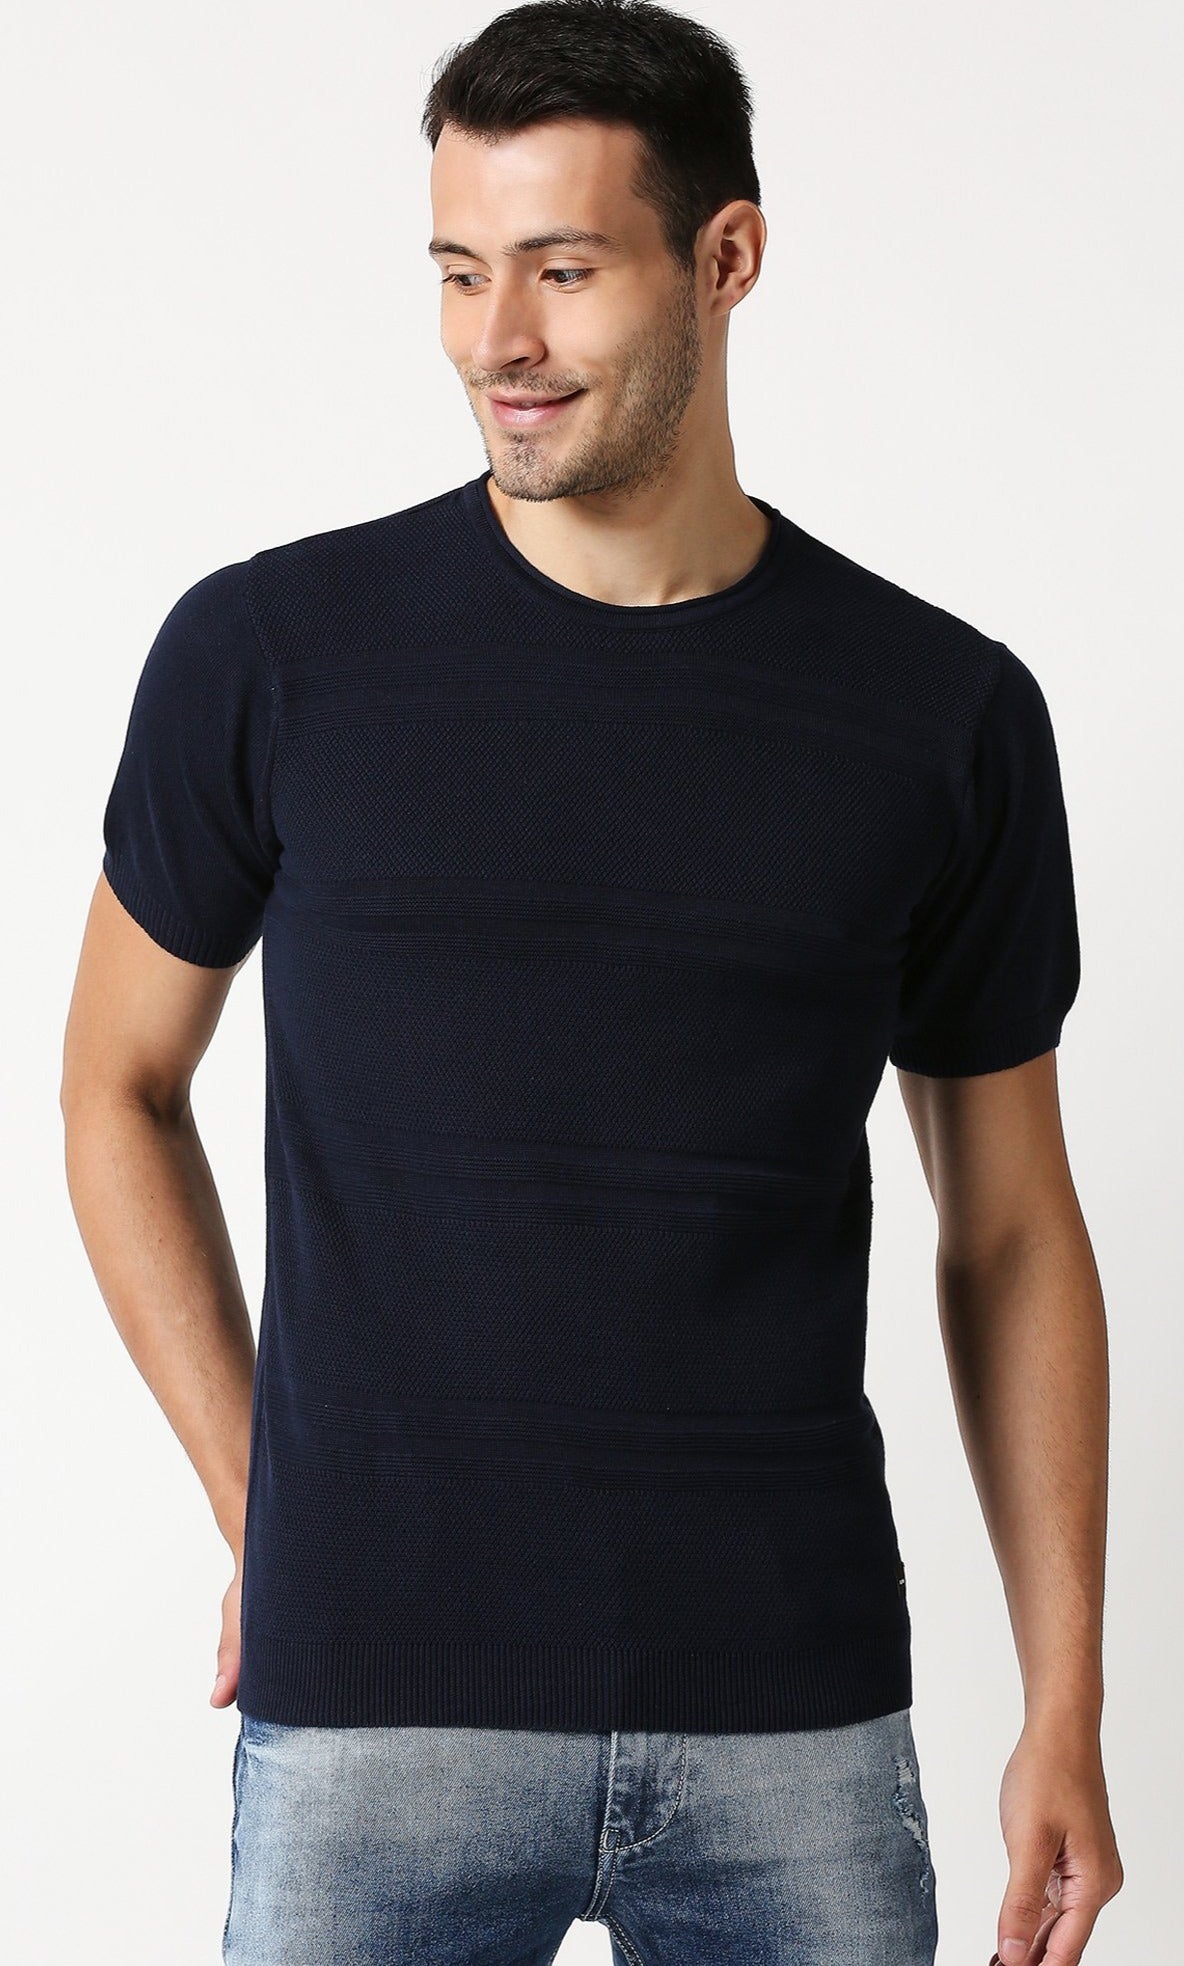 Fostino Escape Navy Round Neck T-Shirt - Fostino - T-Shirts